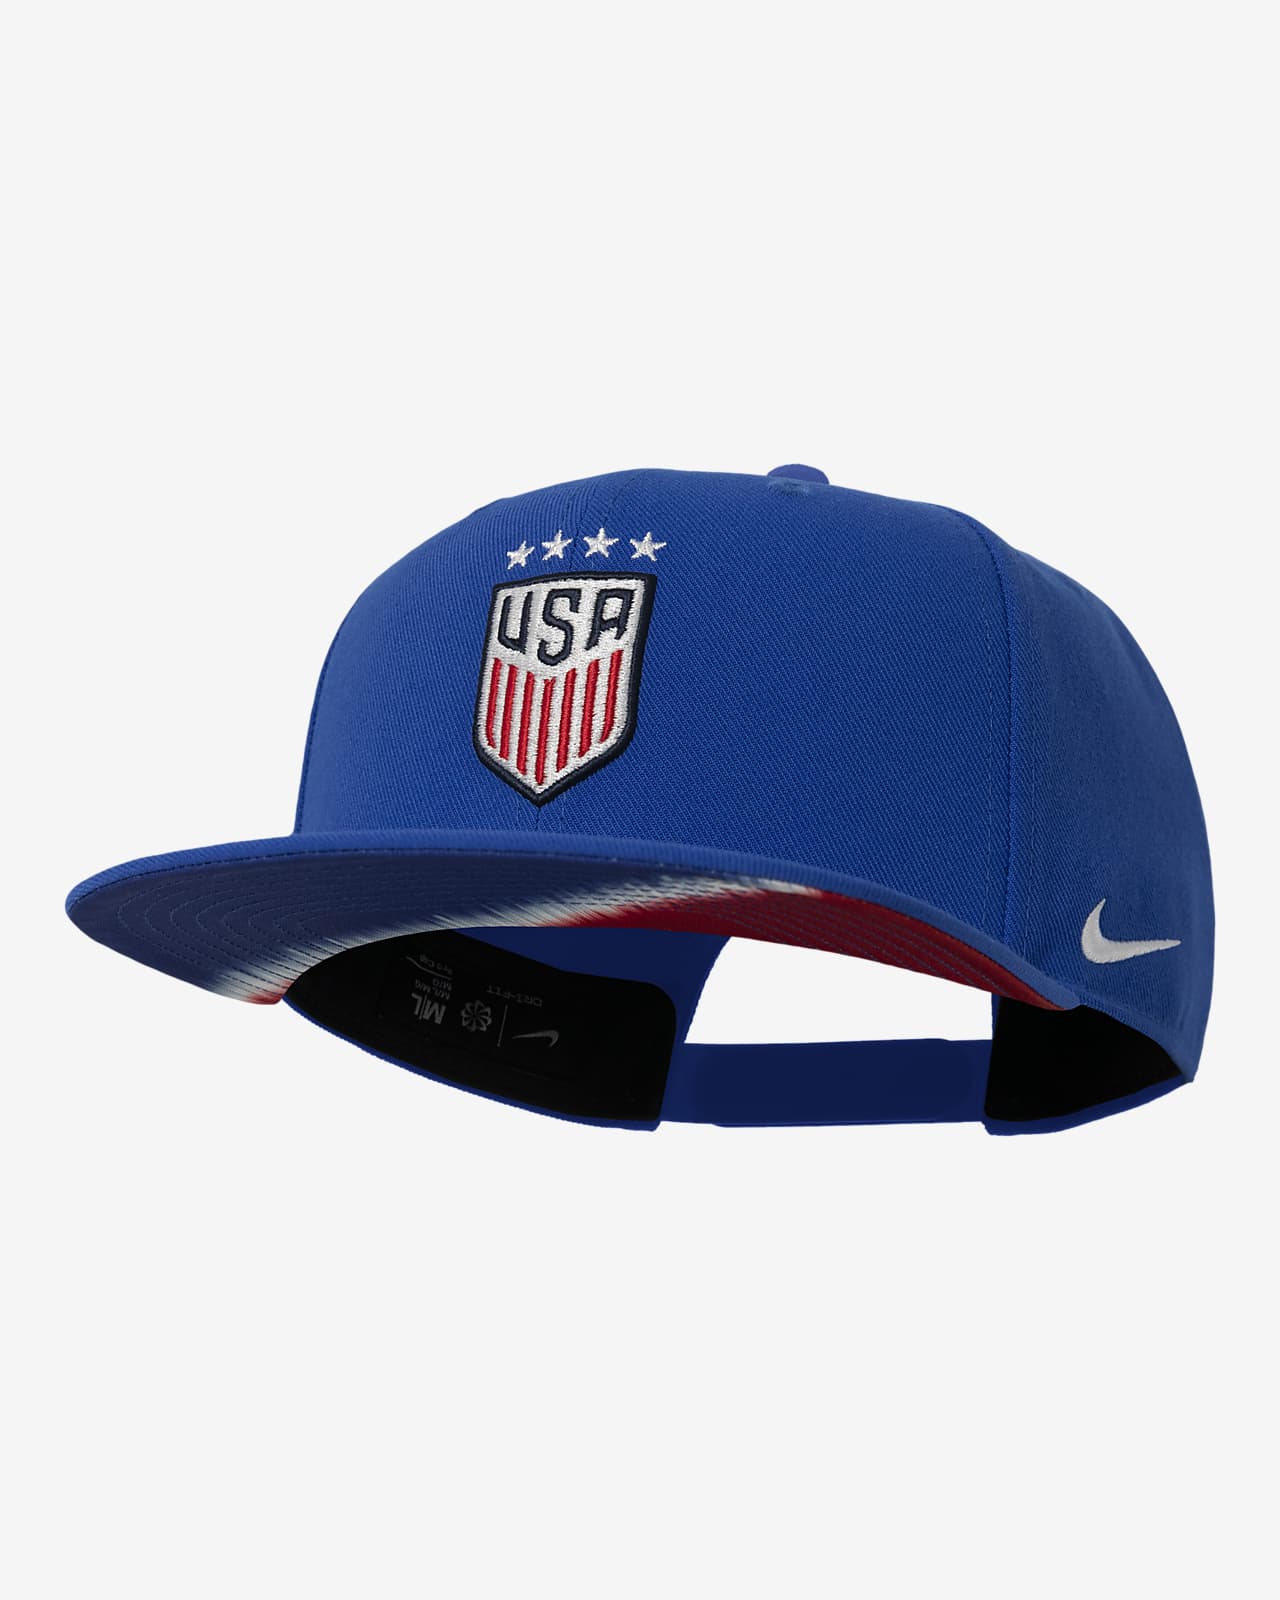 USWNT Pro Nike Soccer Cap